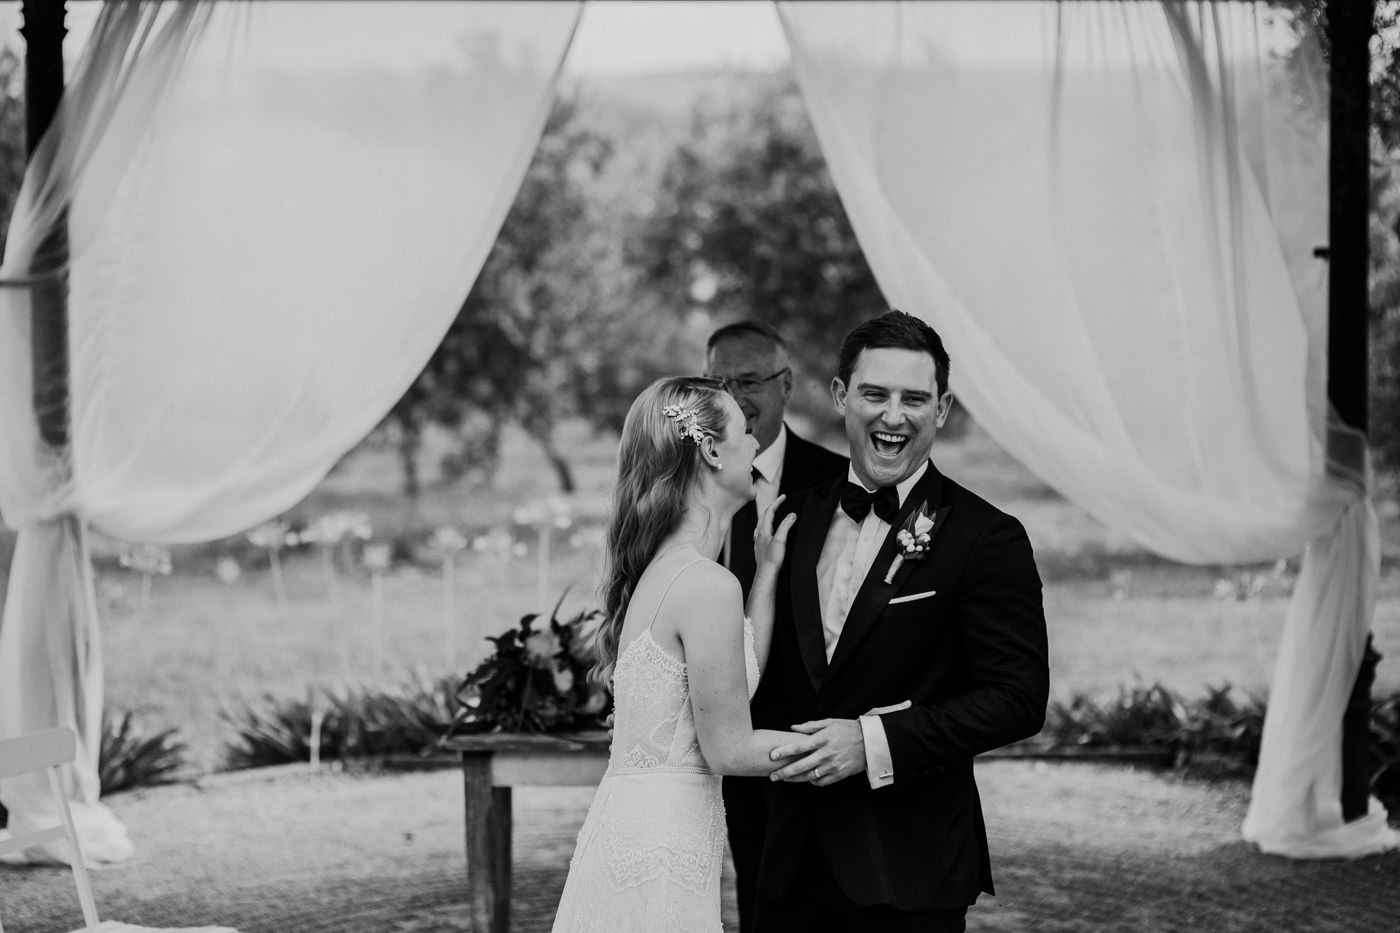 Anthony & Eliet - Wagga Wagga Wedding - Country NSW - Samantha Heather Photography-109.jpg